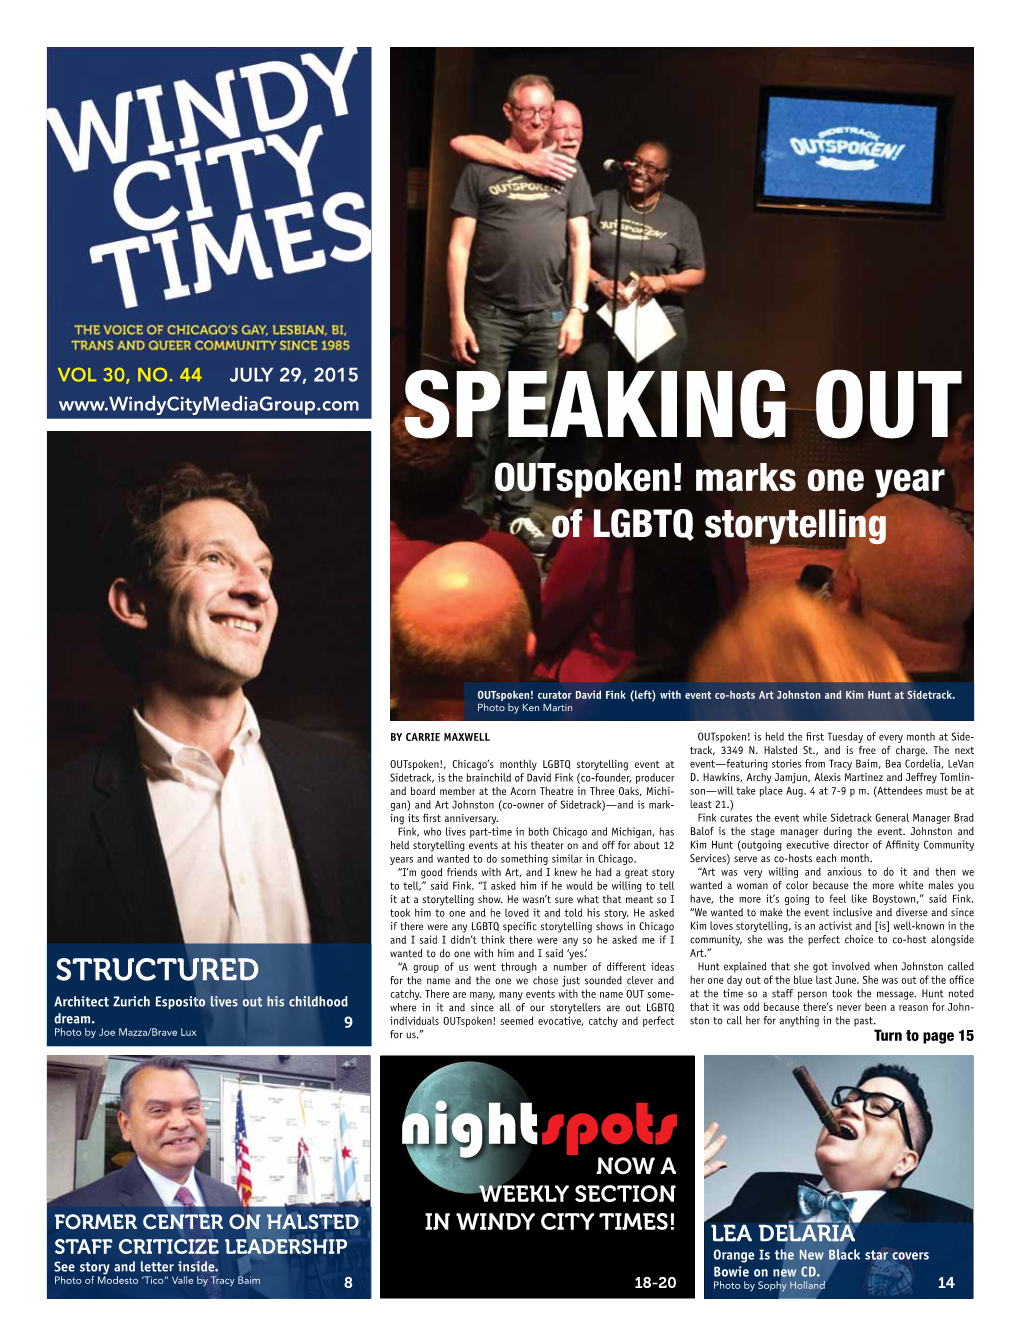 Marks One Year of LGBTQ Storytelling